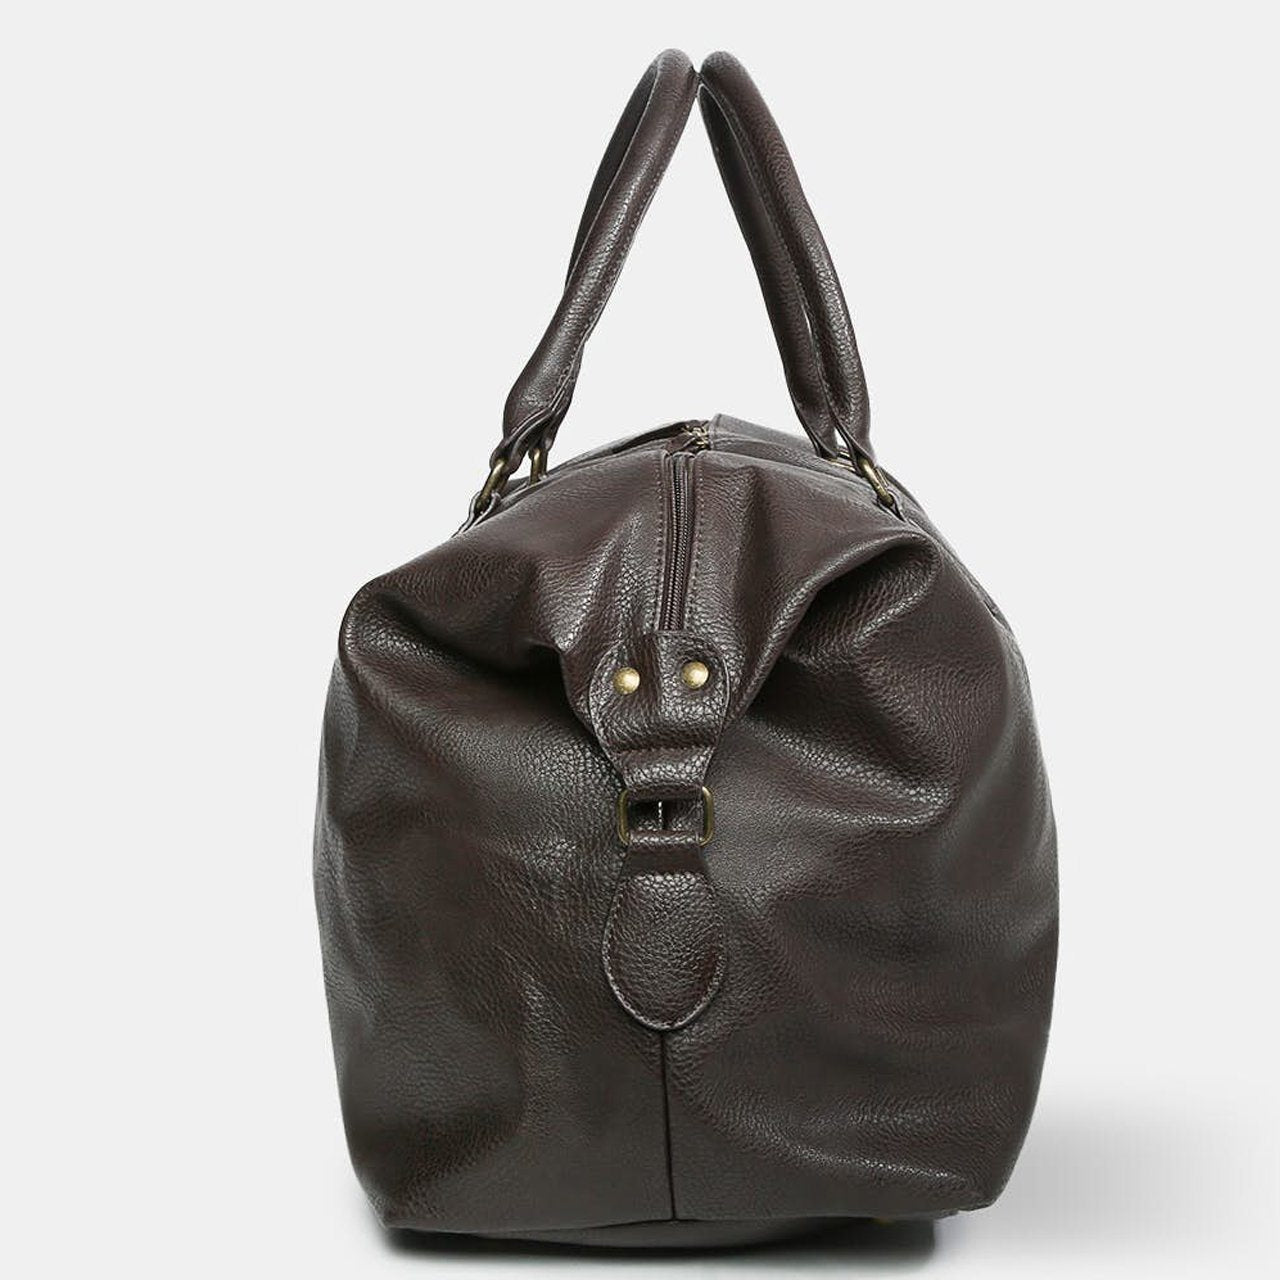 Gunner Brown Vegan Leather Duffle Bag– Portable4Life